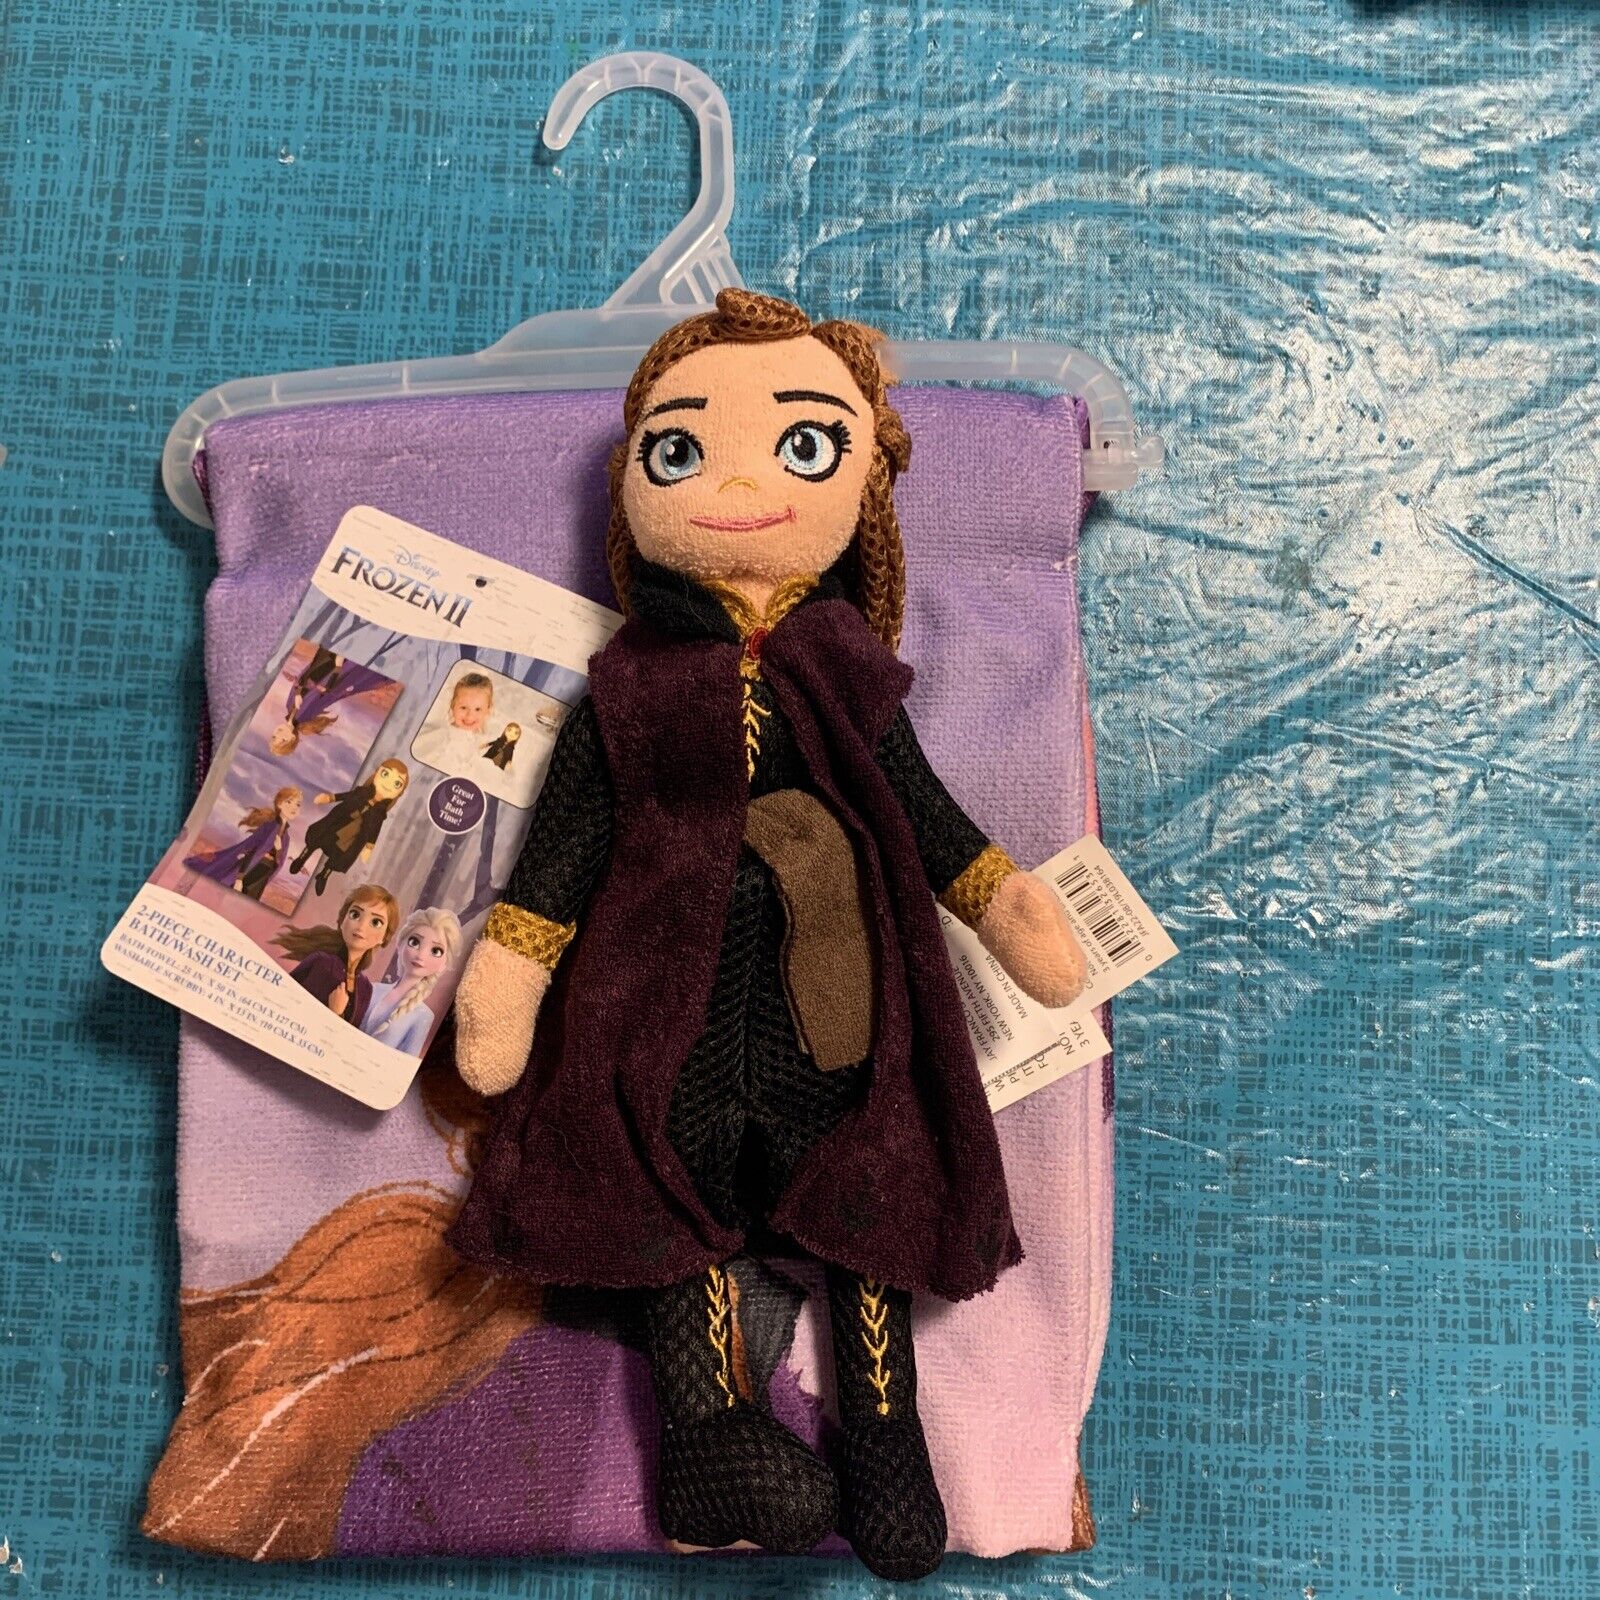 Disney Frozen Ii 2 Piece Anna Character Child's Bath Wash Set Towel Toy Scrubby